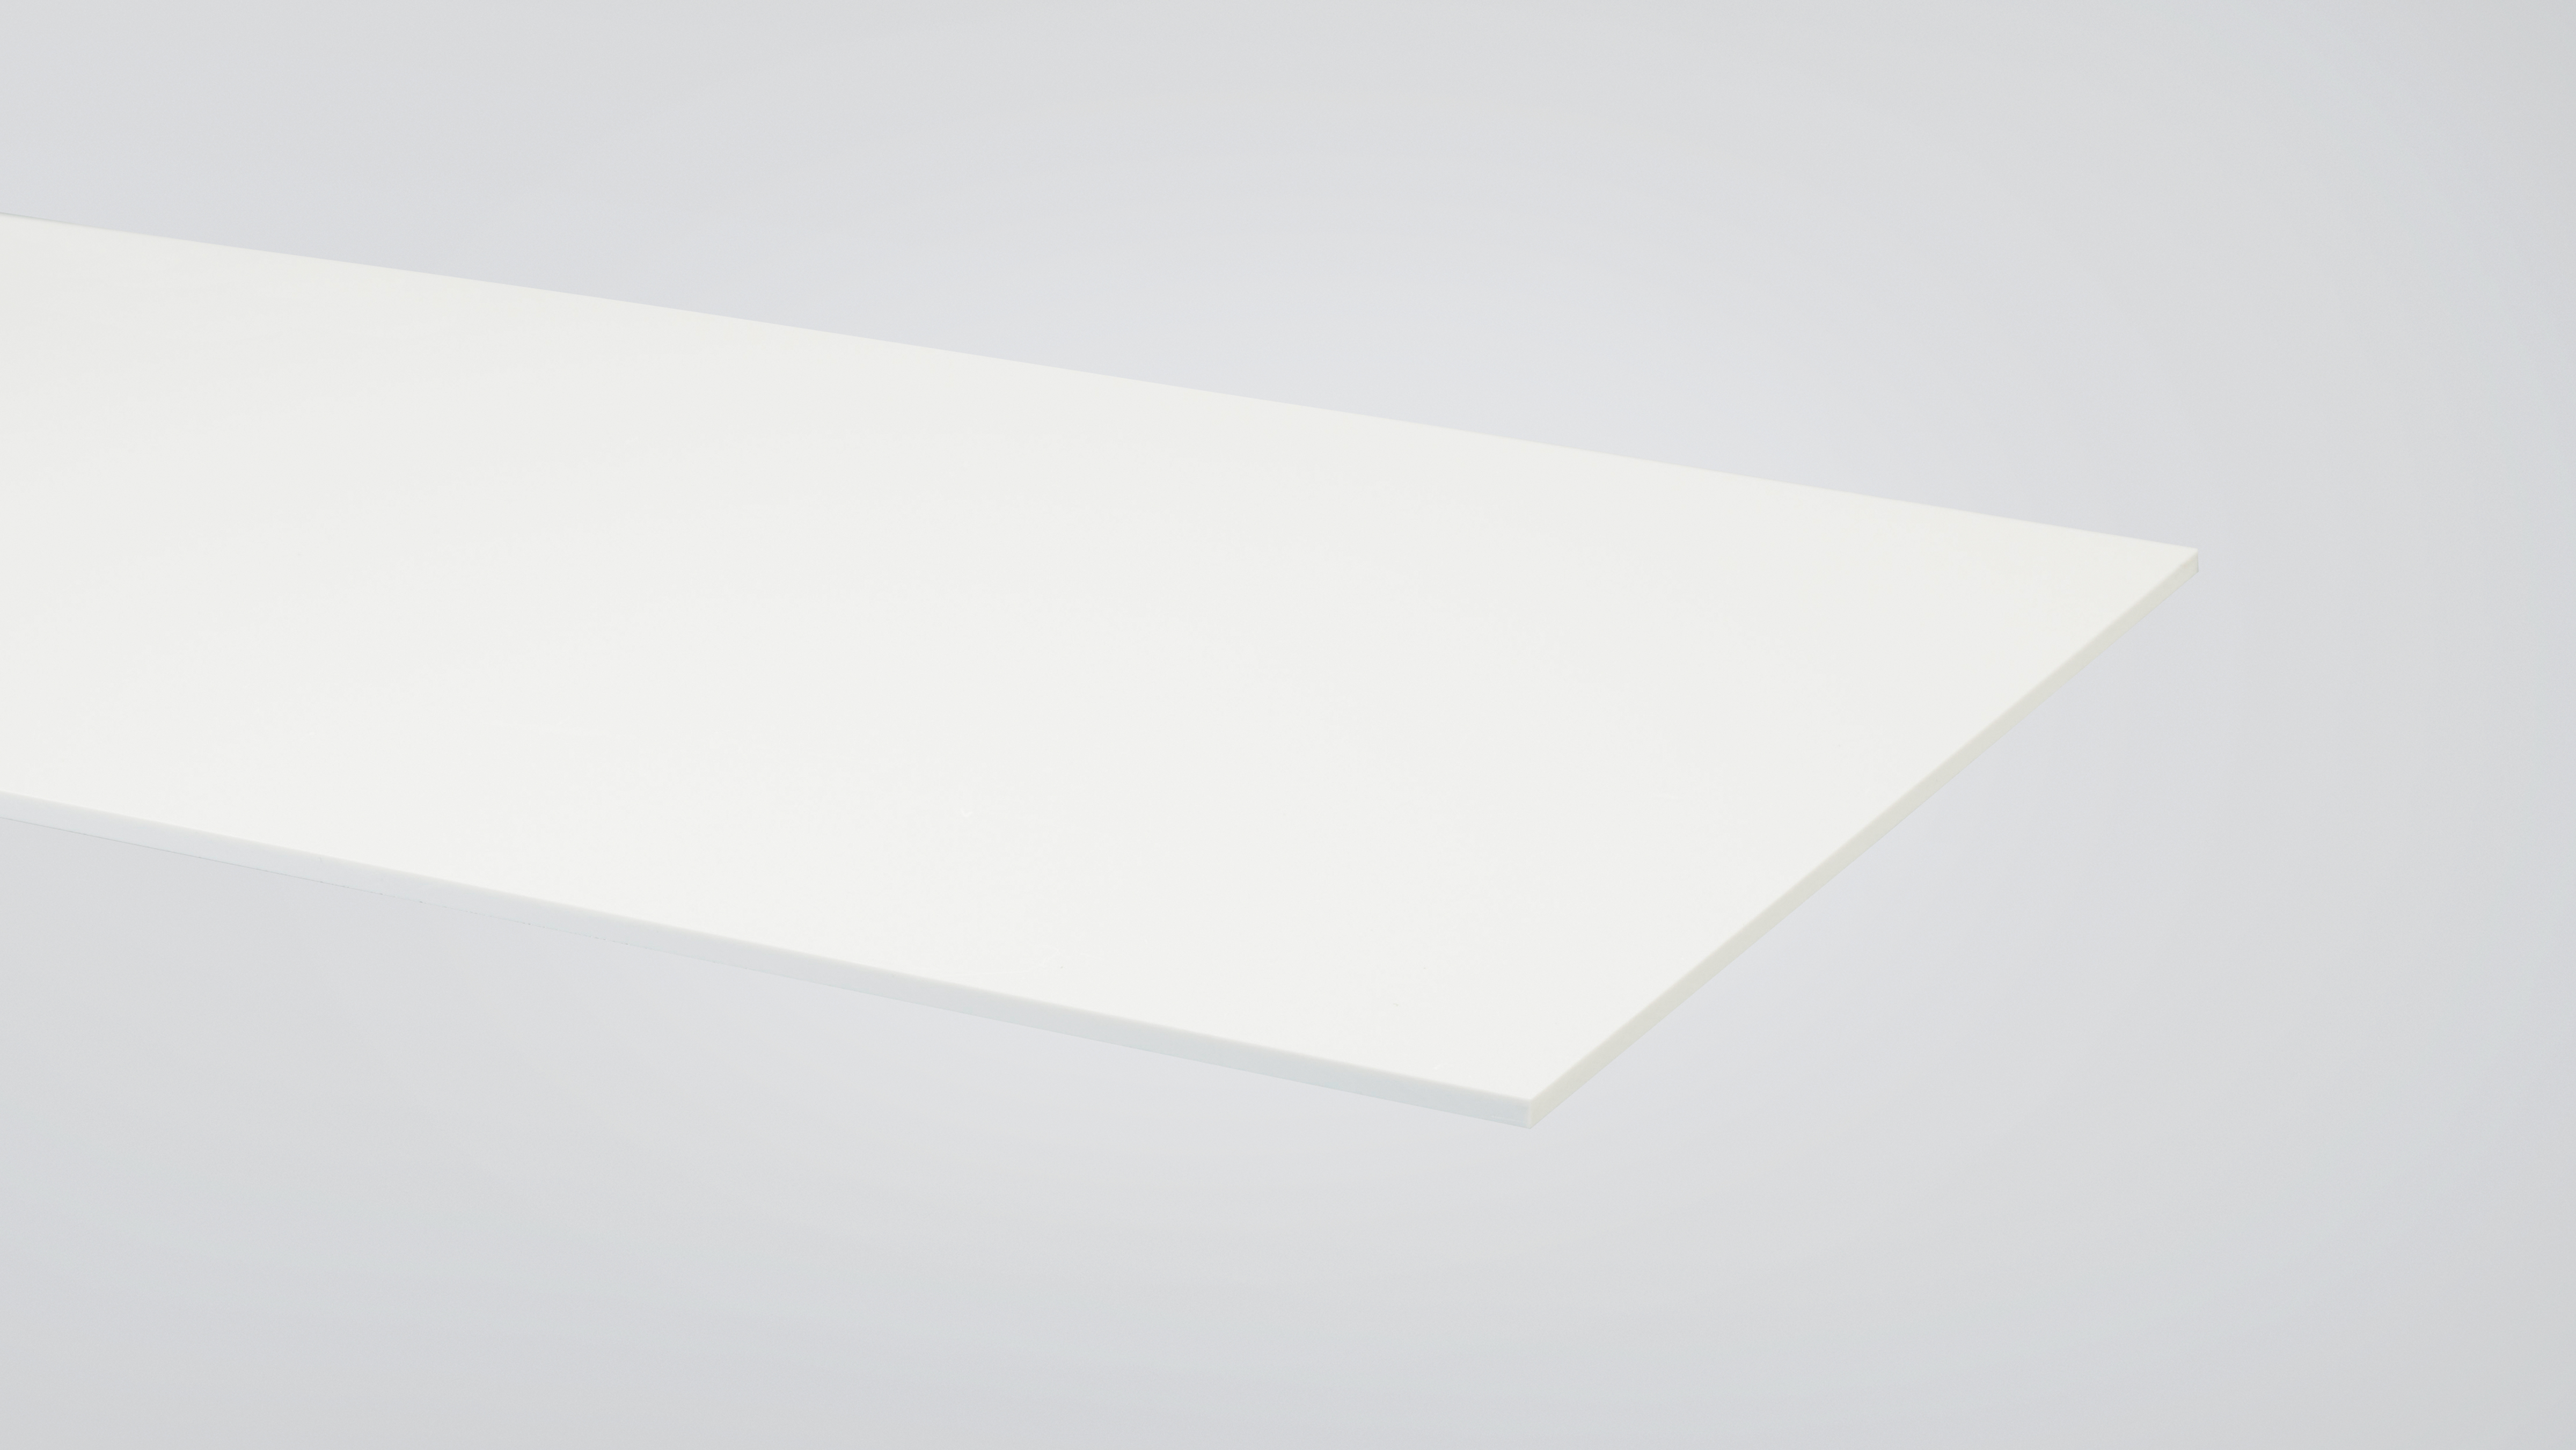 Polystyrol-Platte weiss 0,5 mm dick, 2000 x 1000 mm